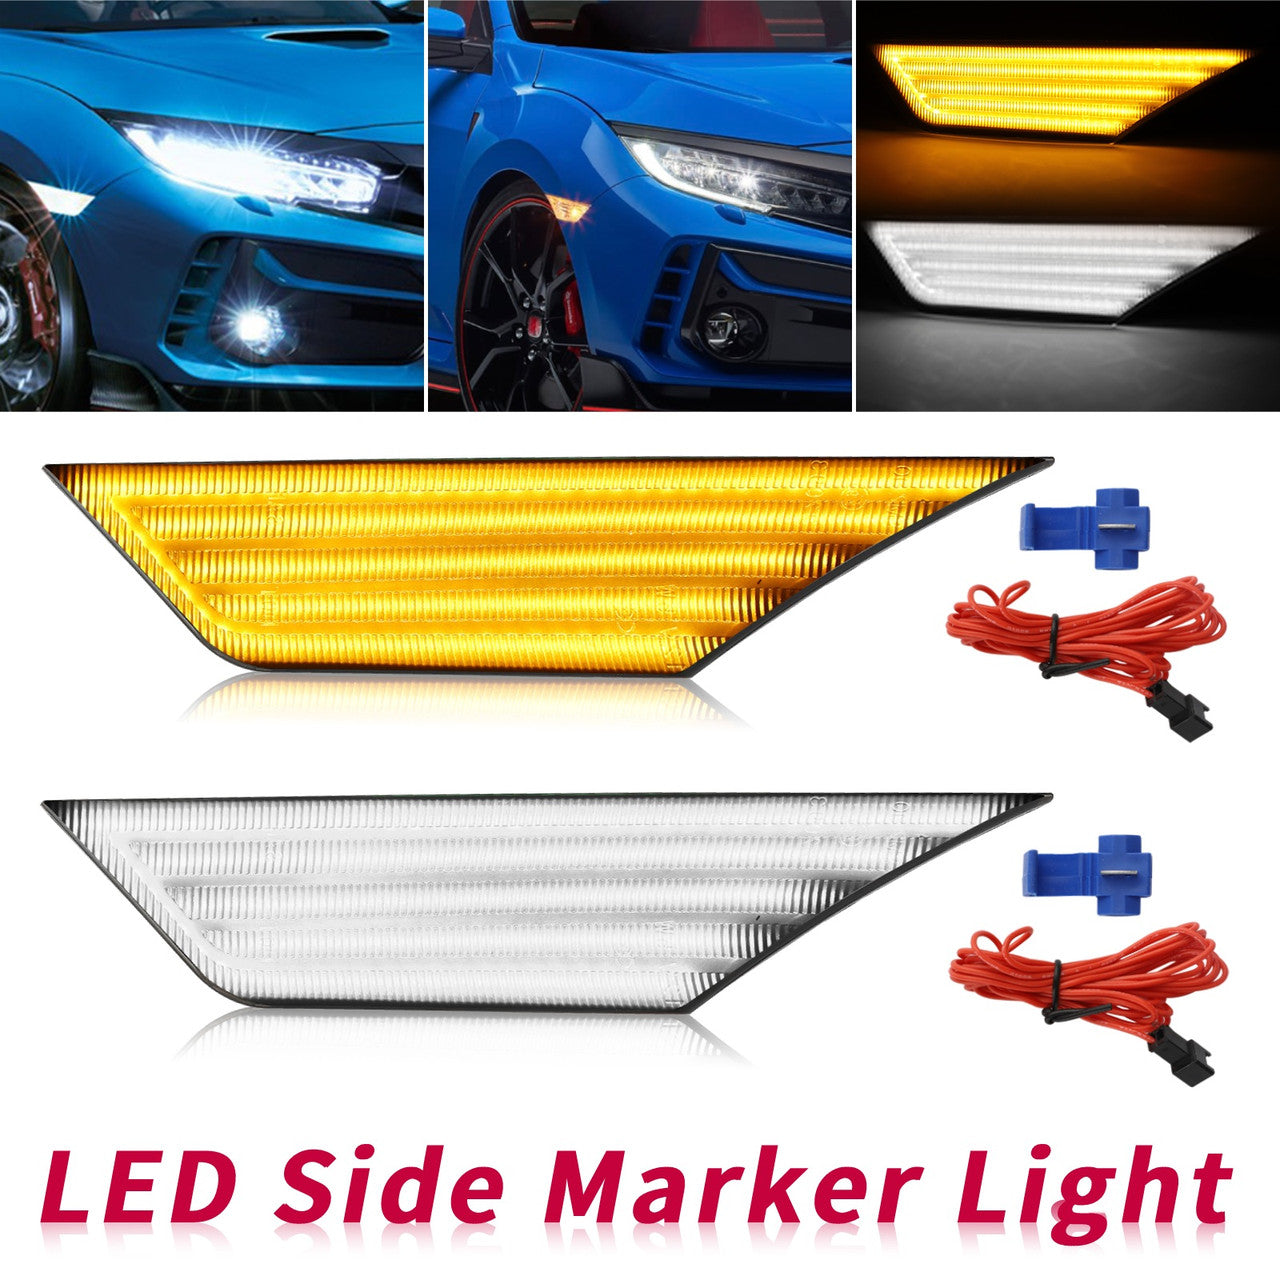 LED Side Marker Light For Honda Civic - Amber LED Lights compatible with 2016-2021 Honda Civic